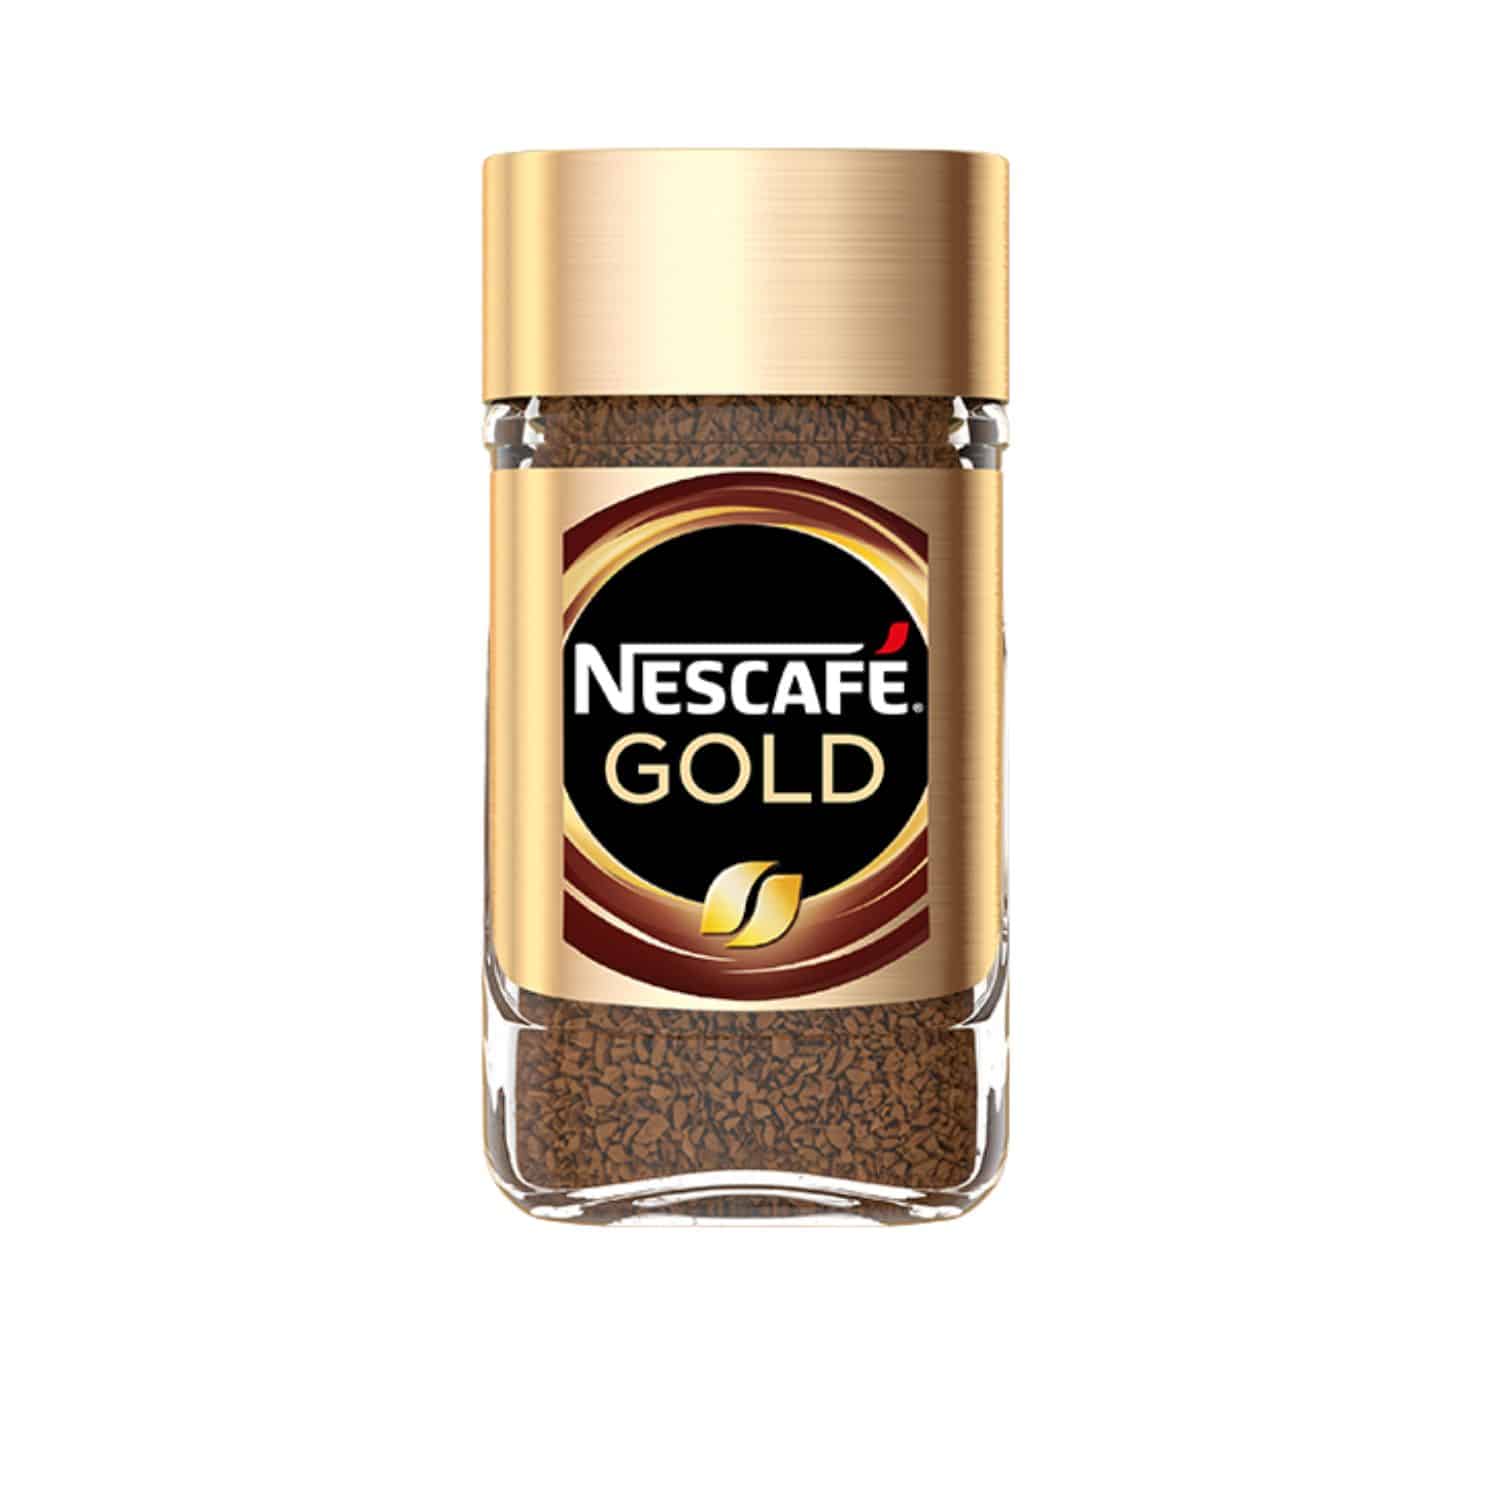 NESCAFE Gold 50g - Imported - SHOPEE MALL | Sri Lanka